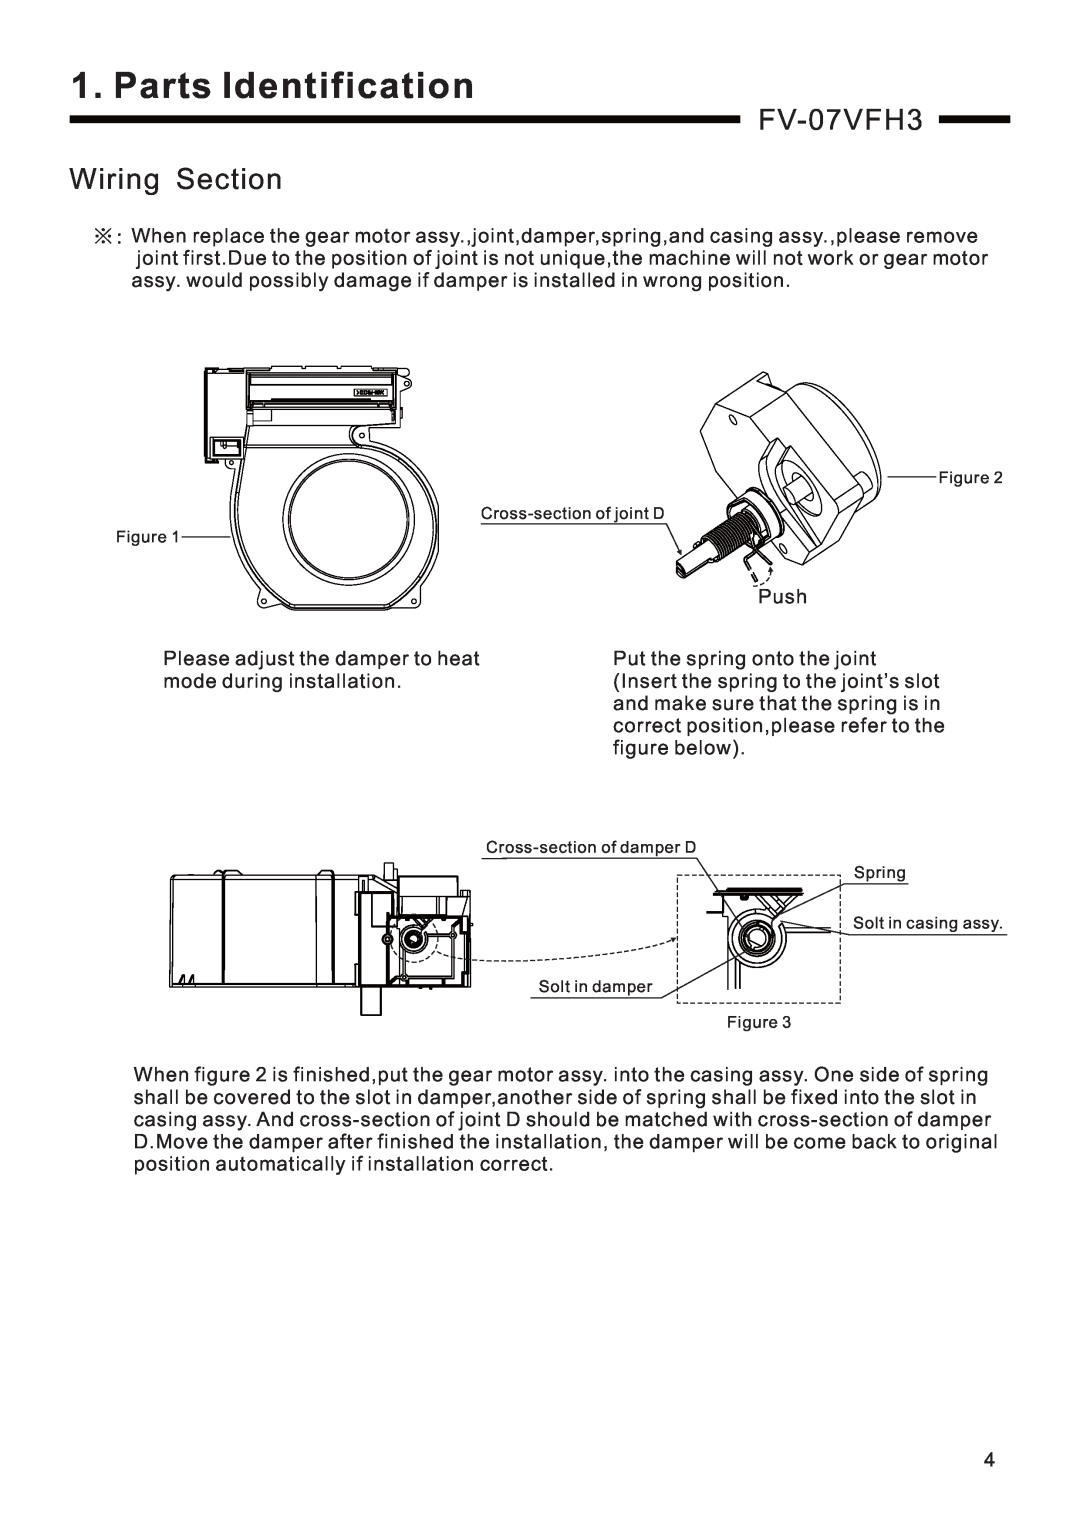 Panasonic service manual Parts Identification, FV-07VFH3 Wiring Section, Push 